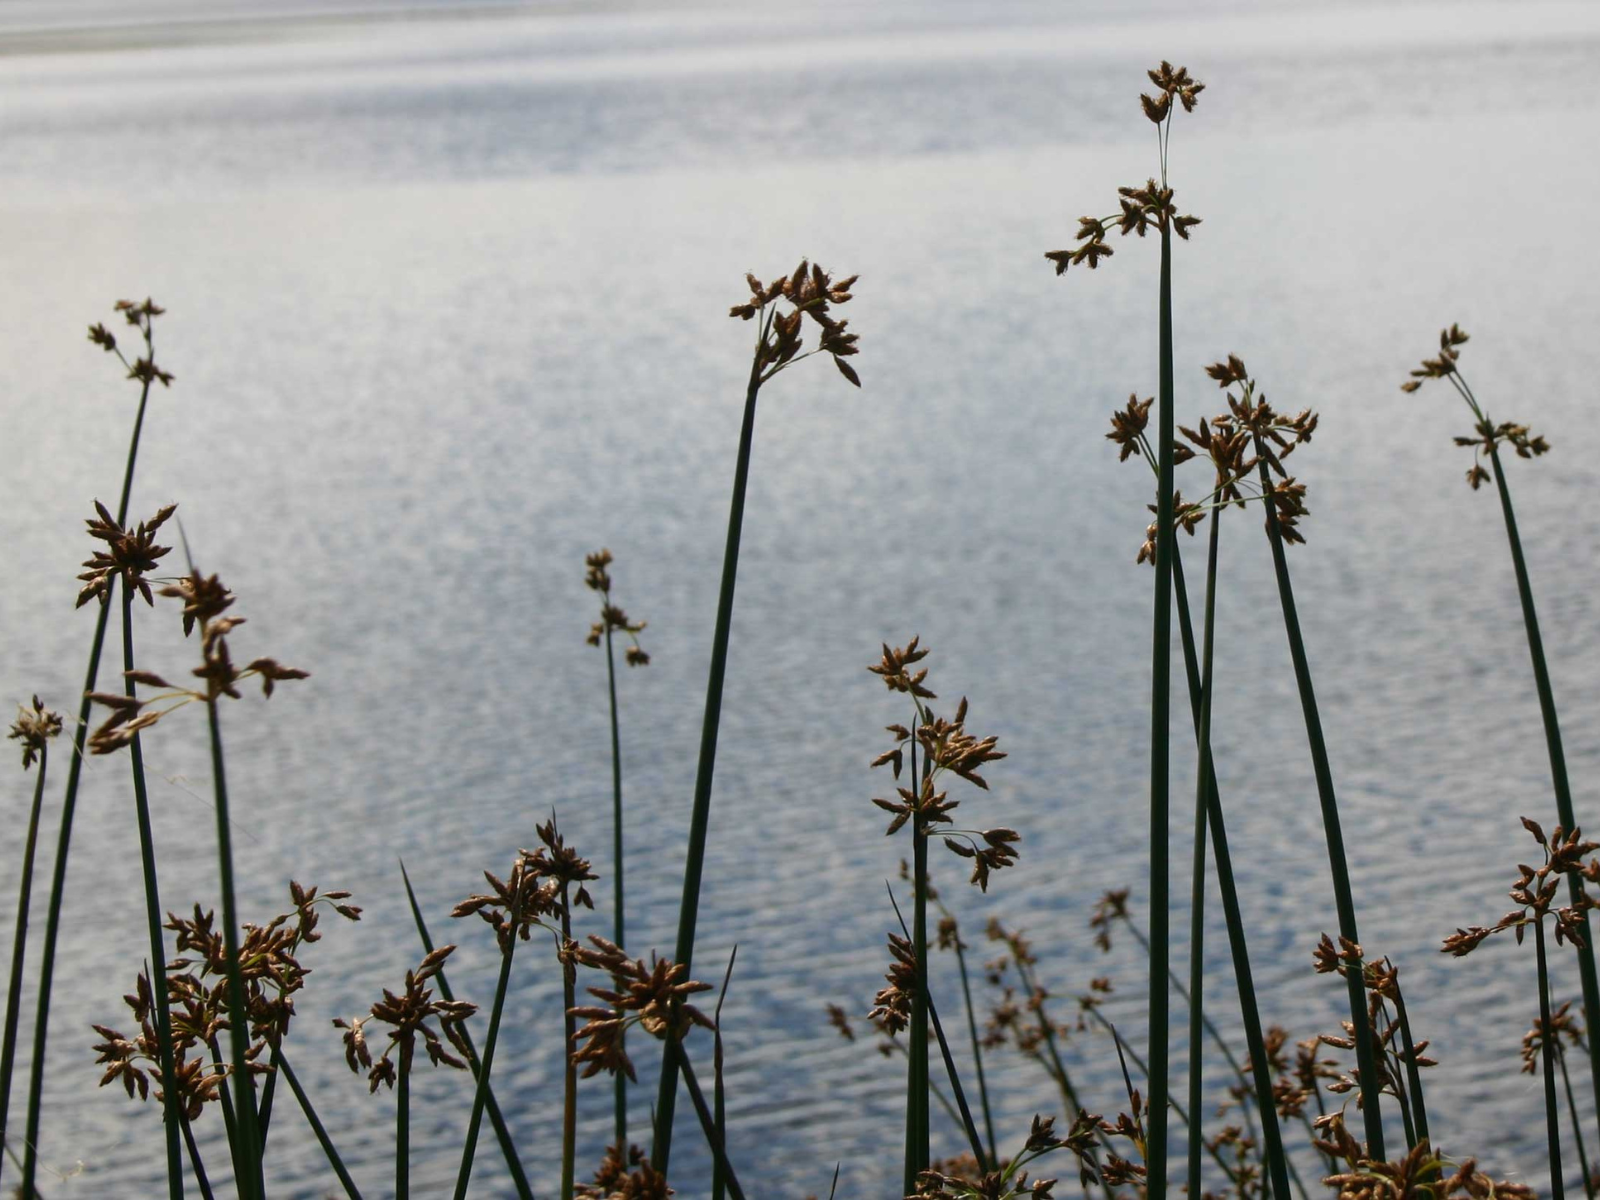 Grain-like stalks growing on a lake's edge.